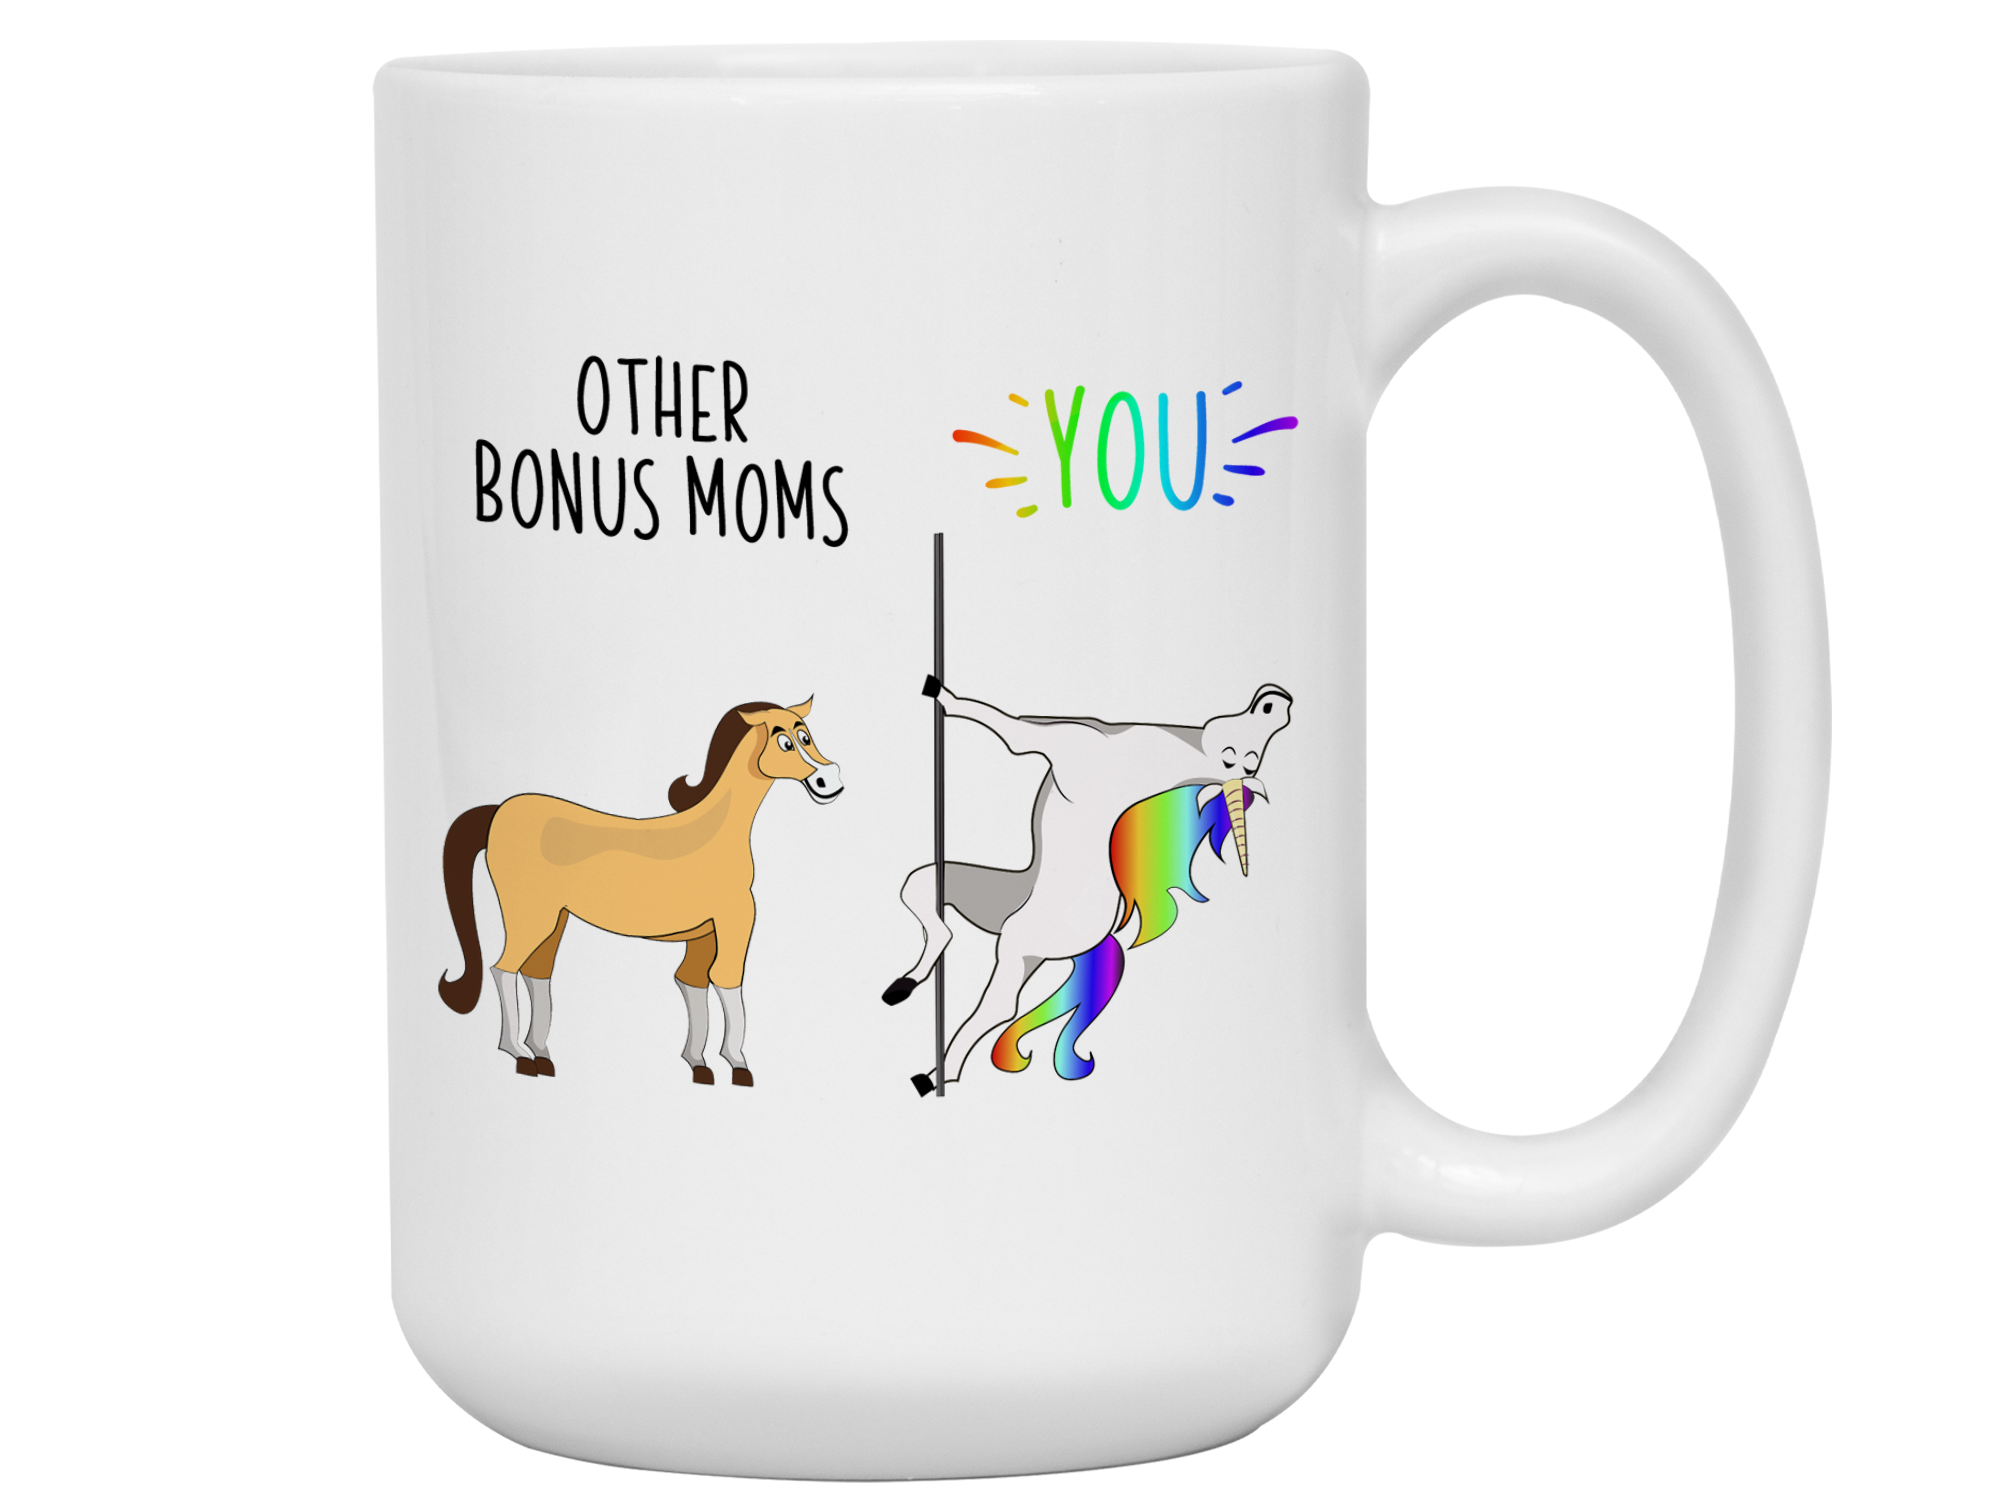 Bonus Mom Gifts & Merchandise for Sale